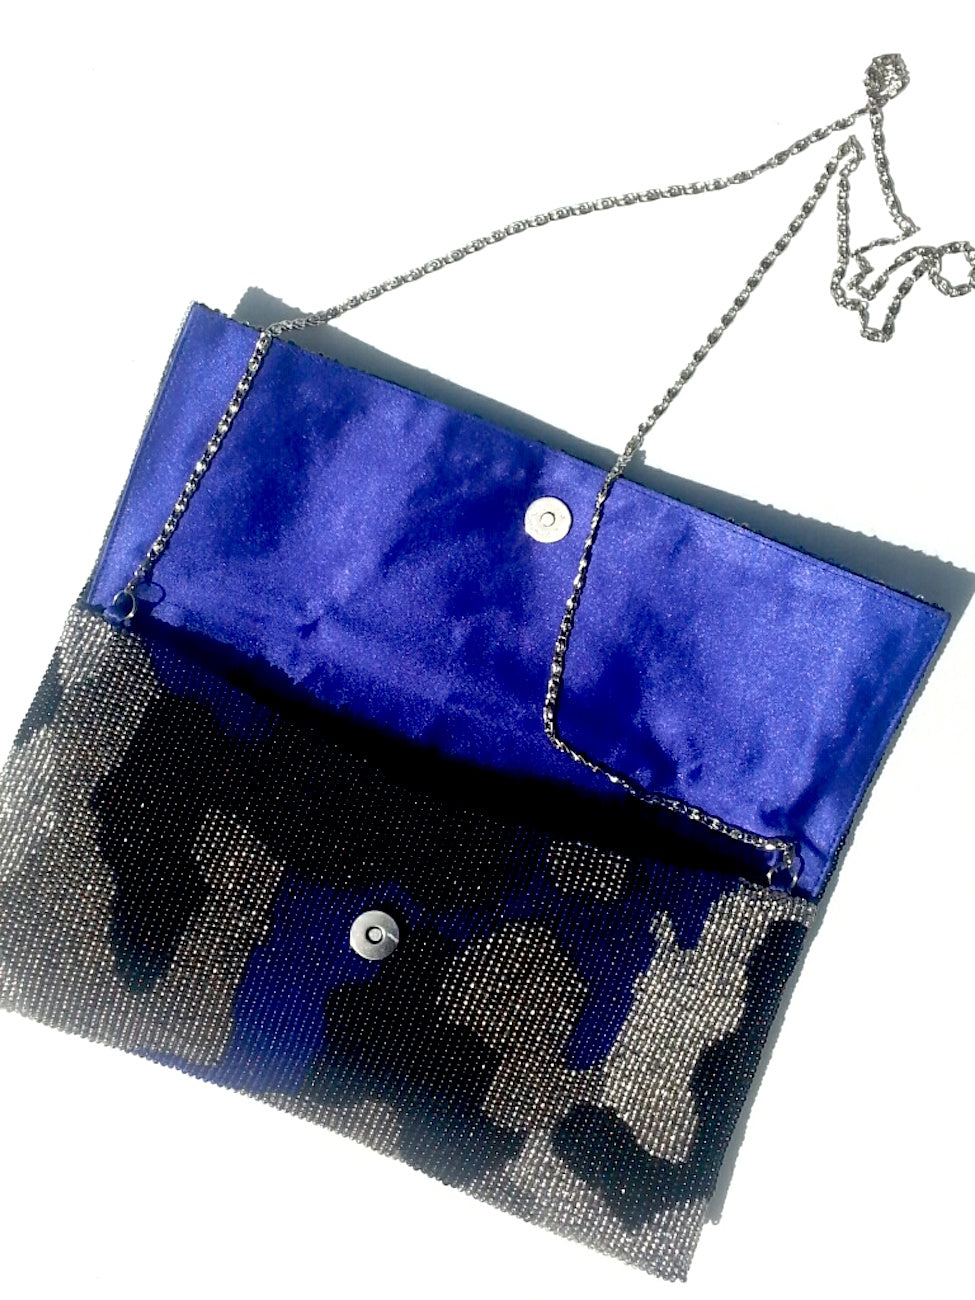 Beaded Envelope Clutch Bag Camo Blue Silver